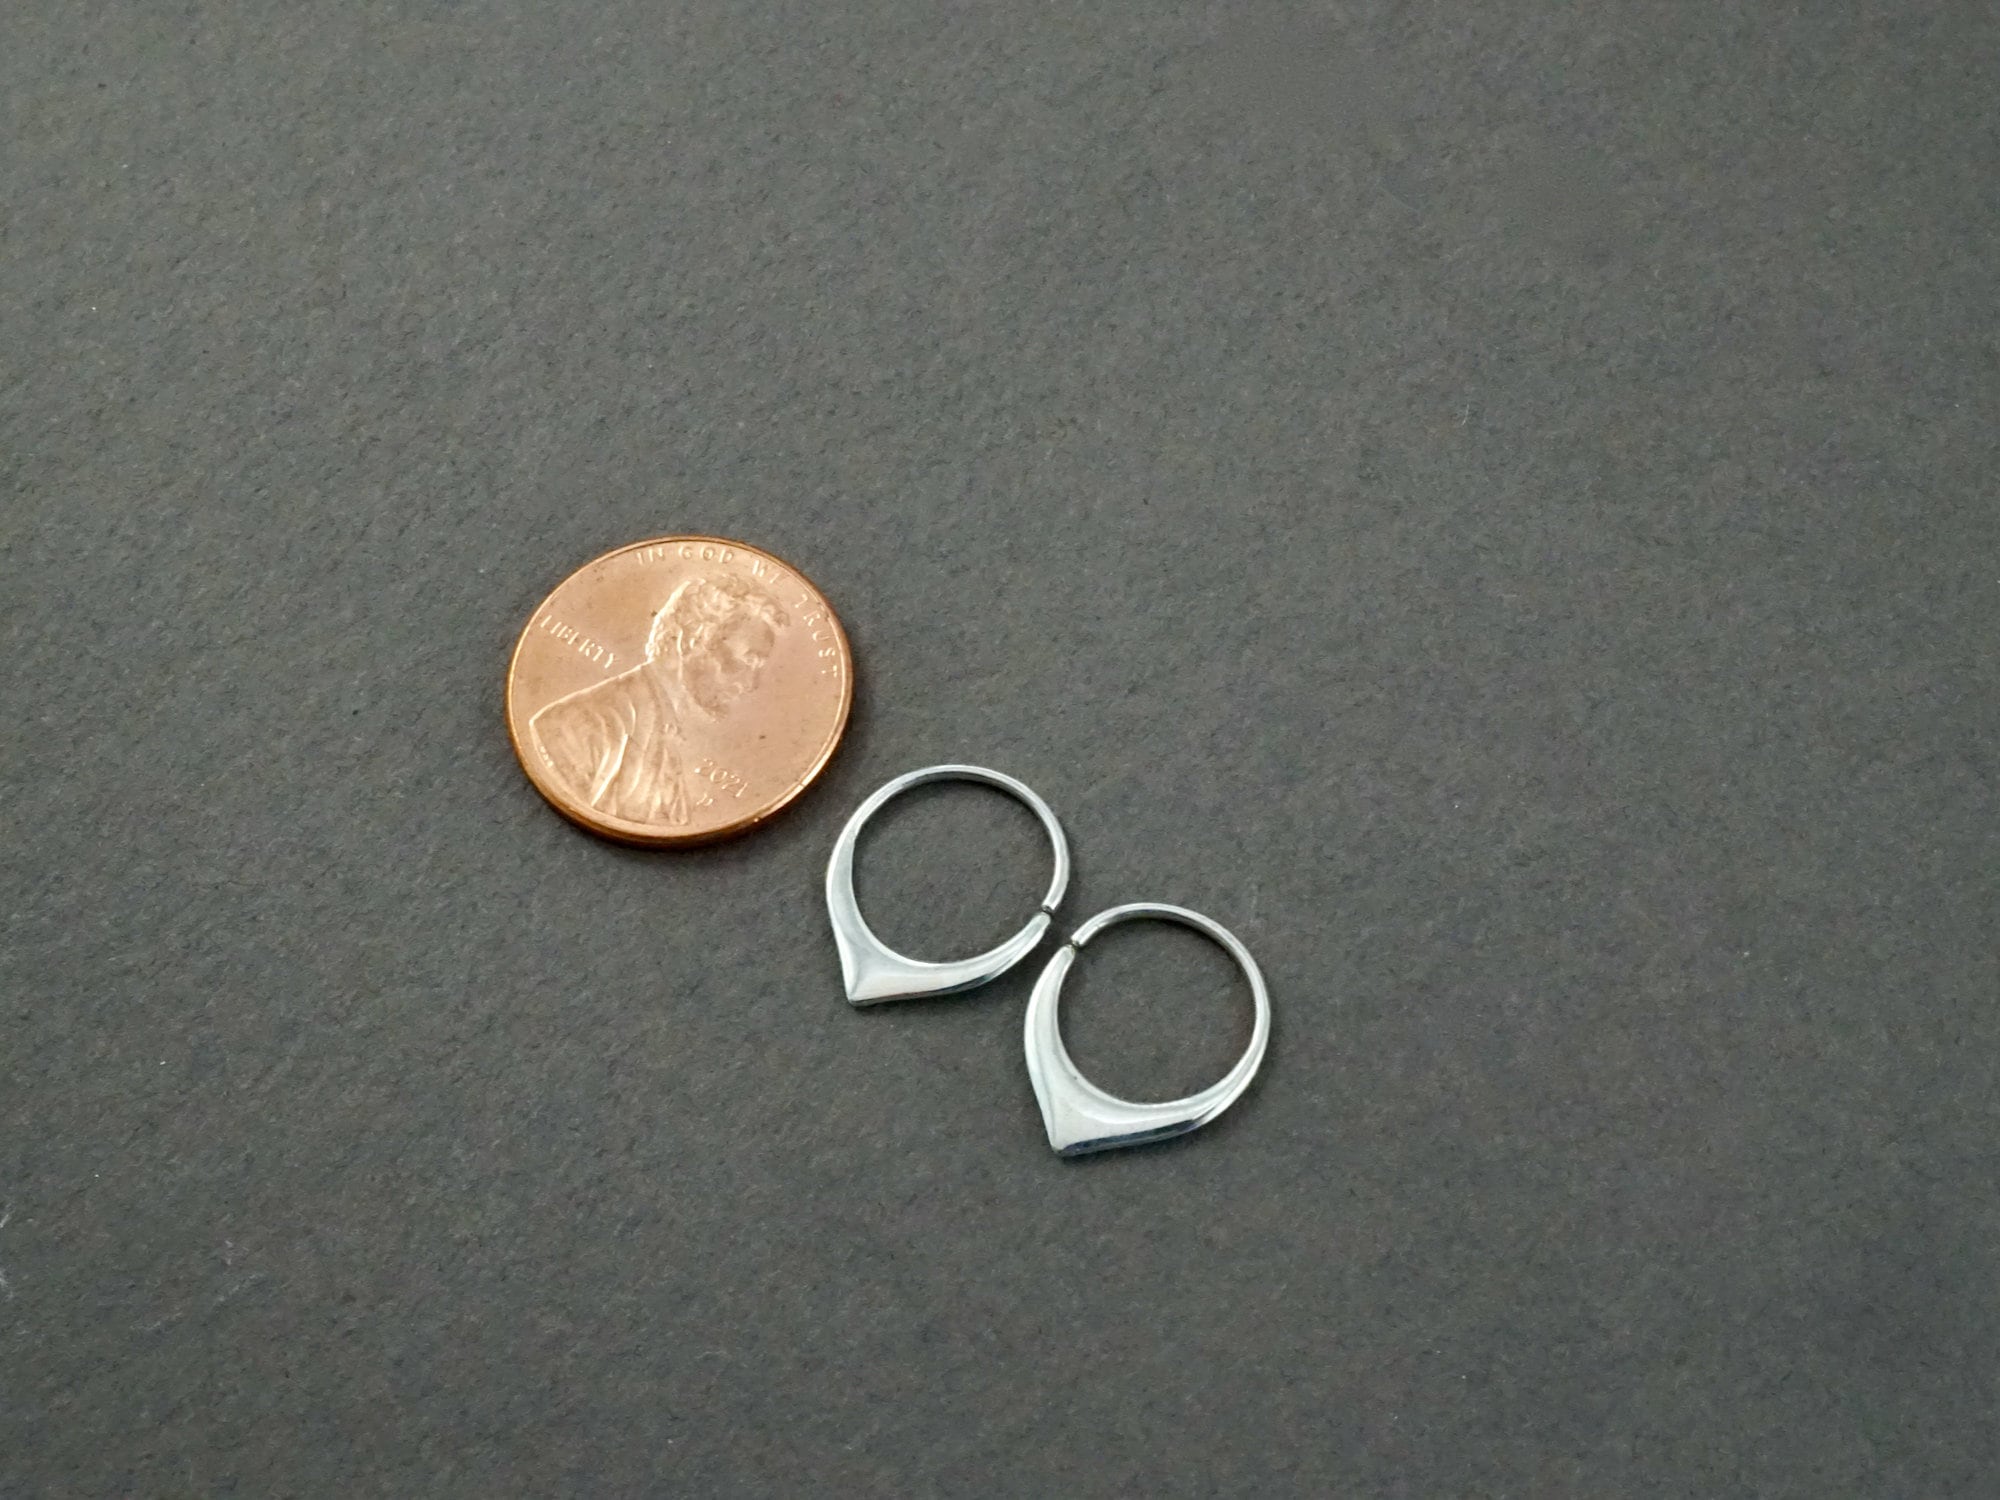 9mm Tiny Petal Hoops  Earrings  - Cartilage, Helix, Daith, Septum - Artisan Brass  - Sleeper Hoops (S270)